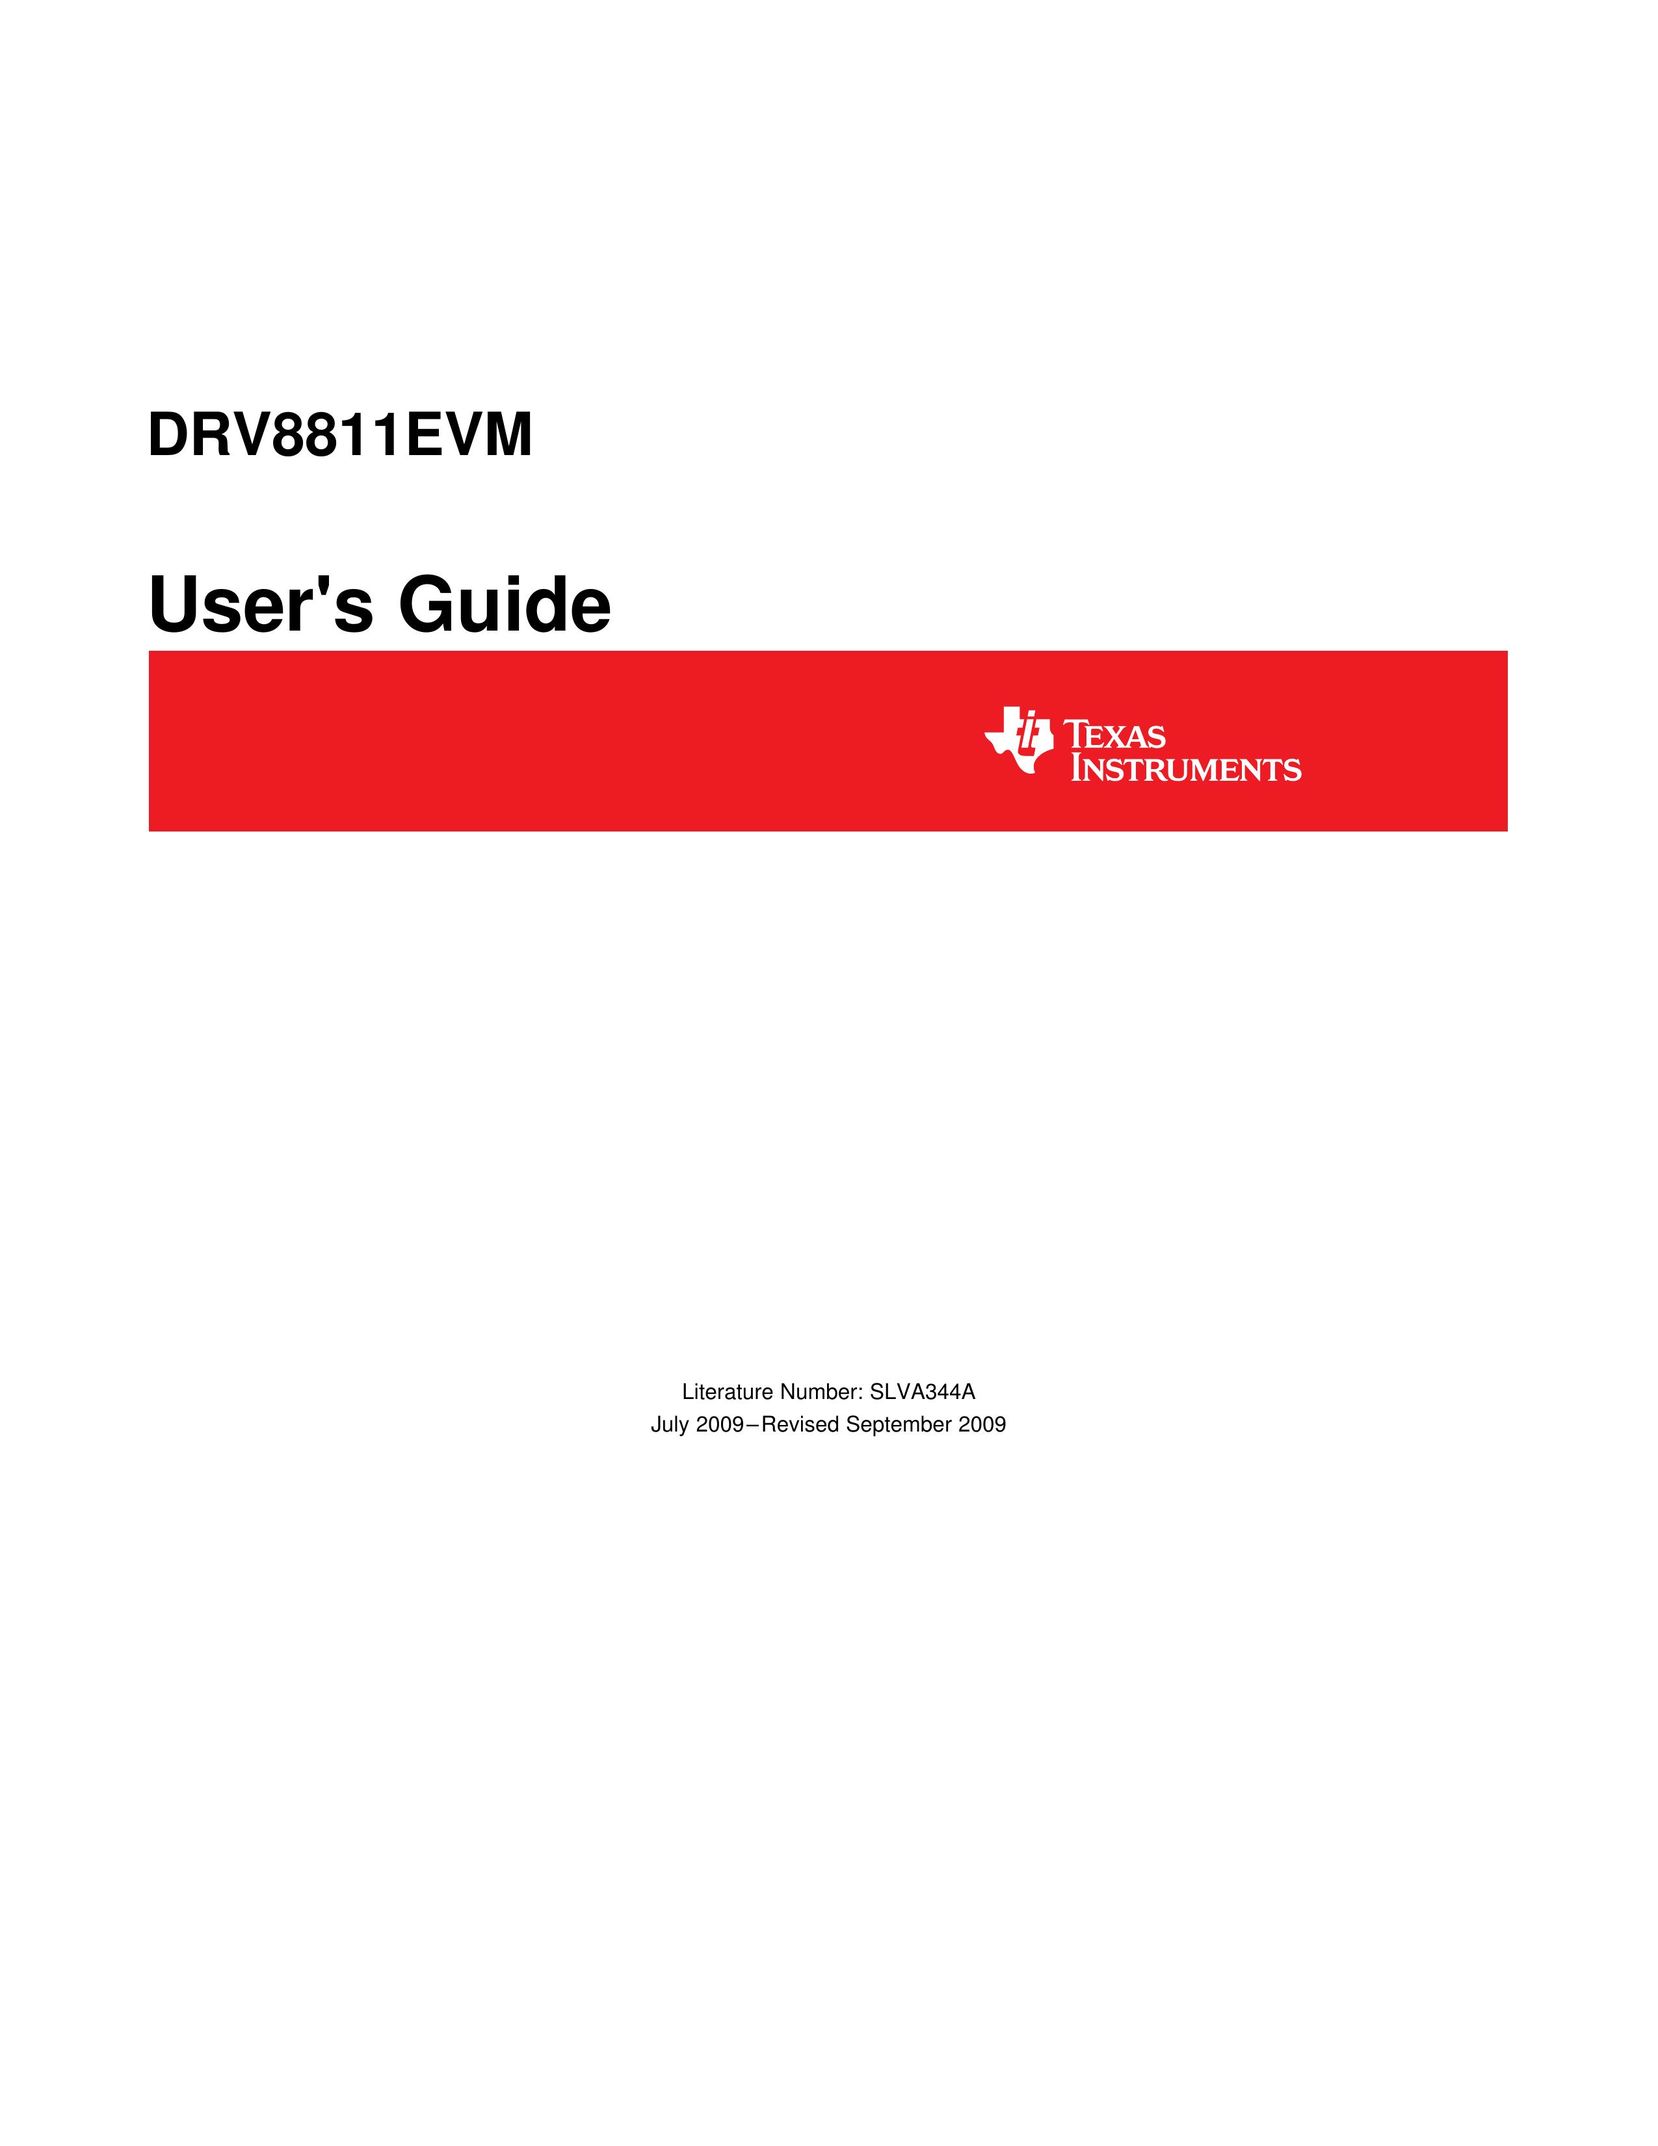 Texas Instruments DRV8811EVM Computer Hardware User Manual